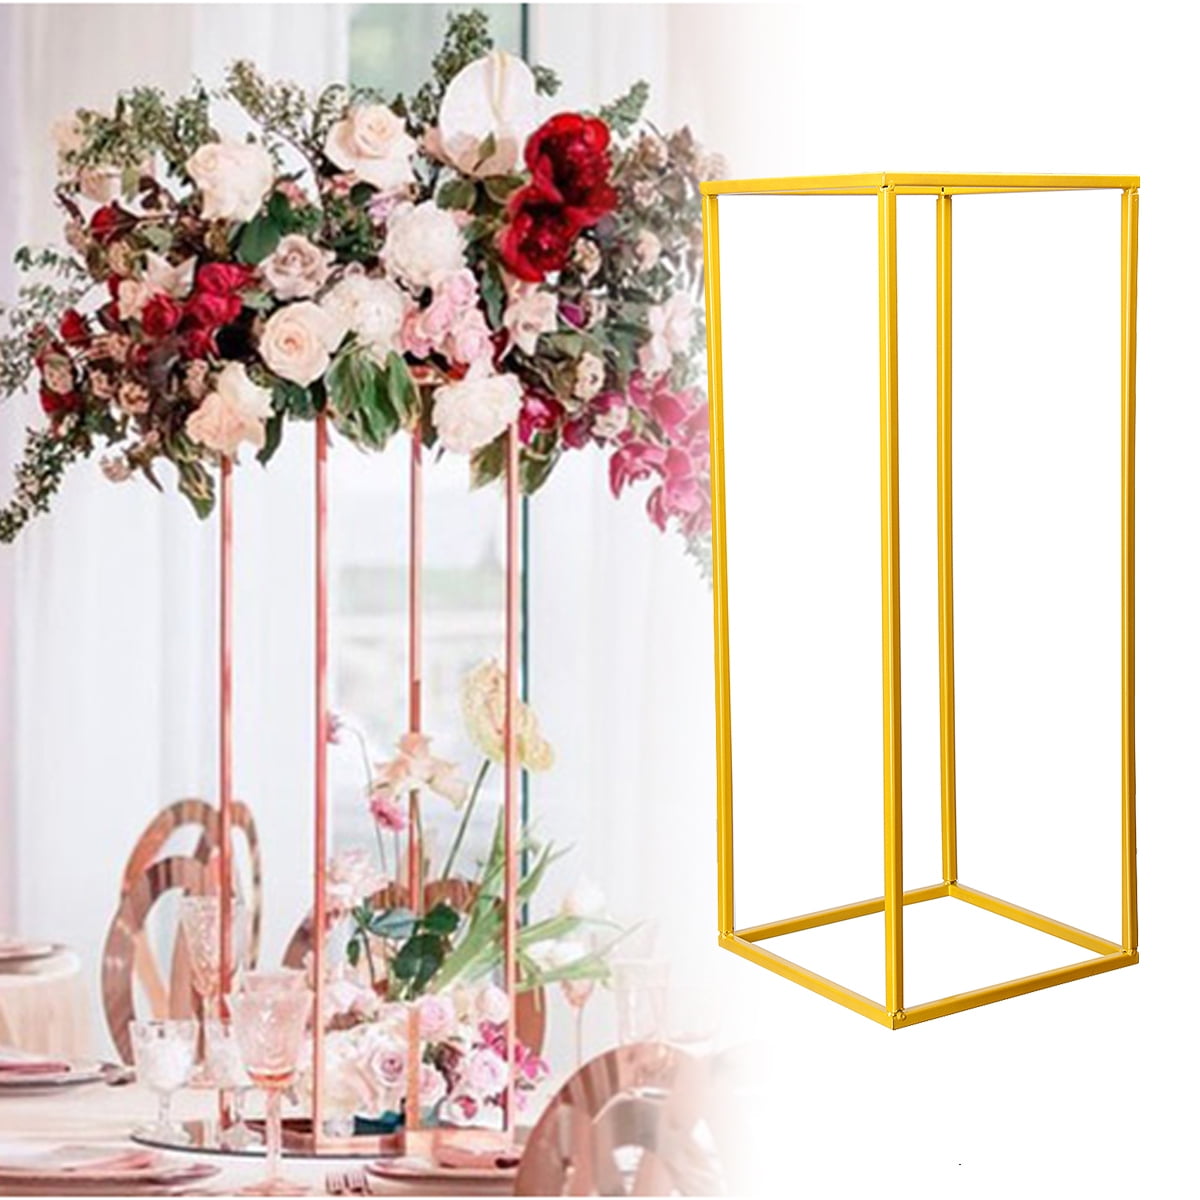 2x Wedding Flower Stand Metal Acrylic Pillar Vase Stand Centerpiece Column Rack 